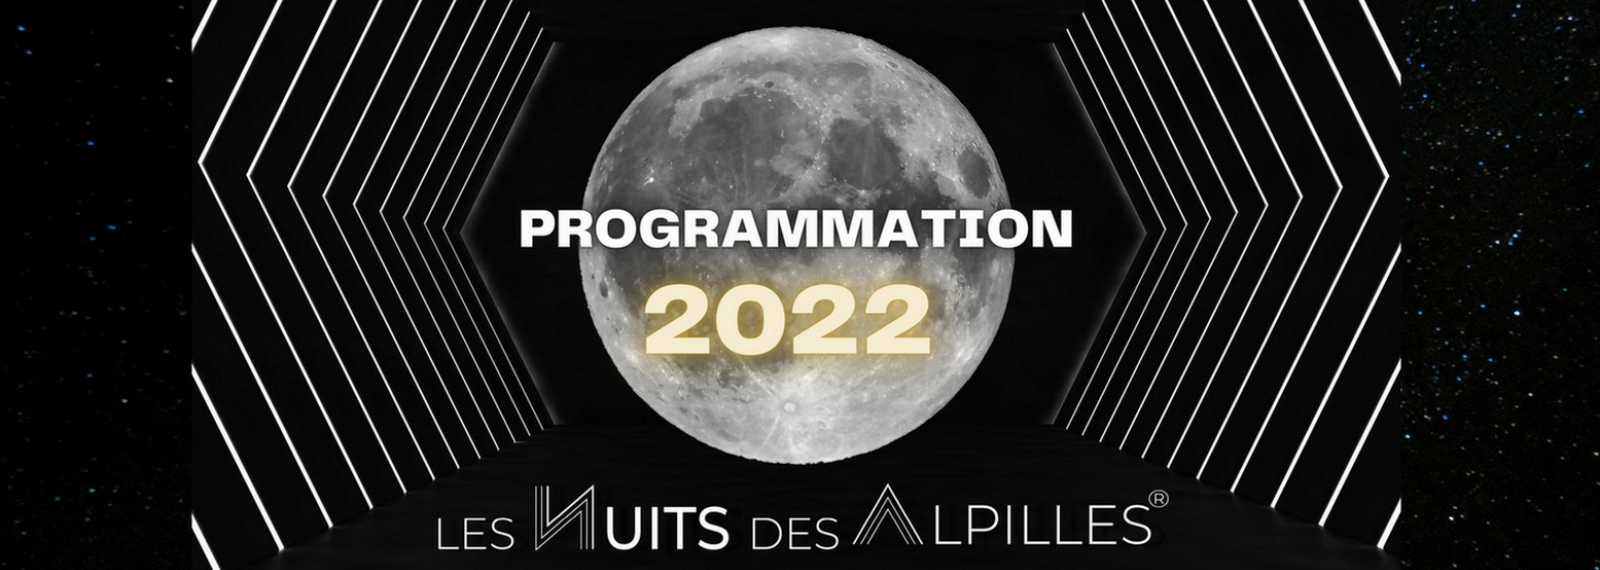 Programmation 2022 Kolybree